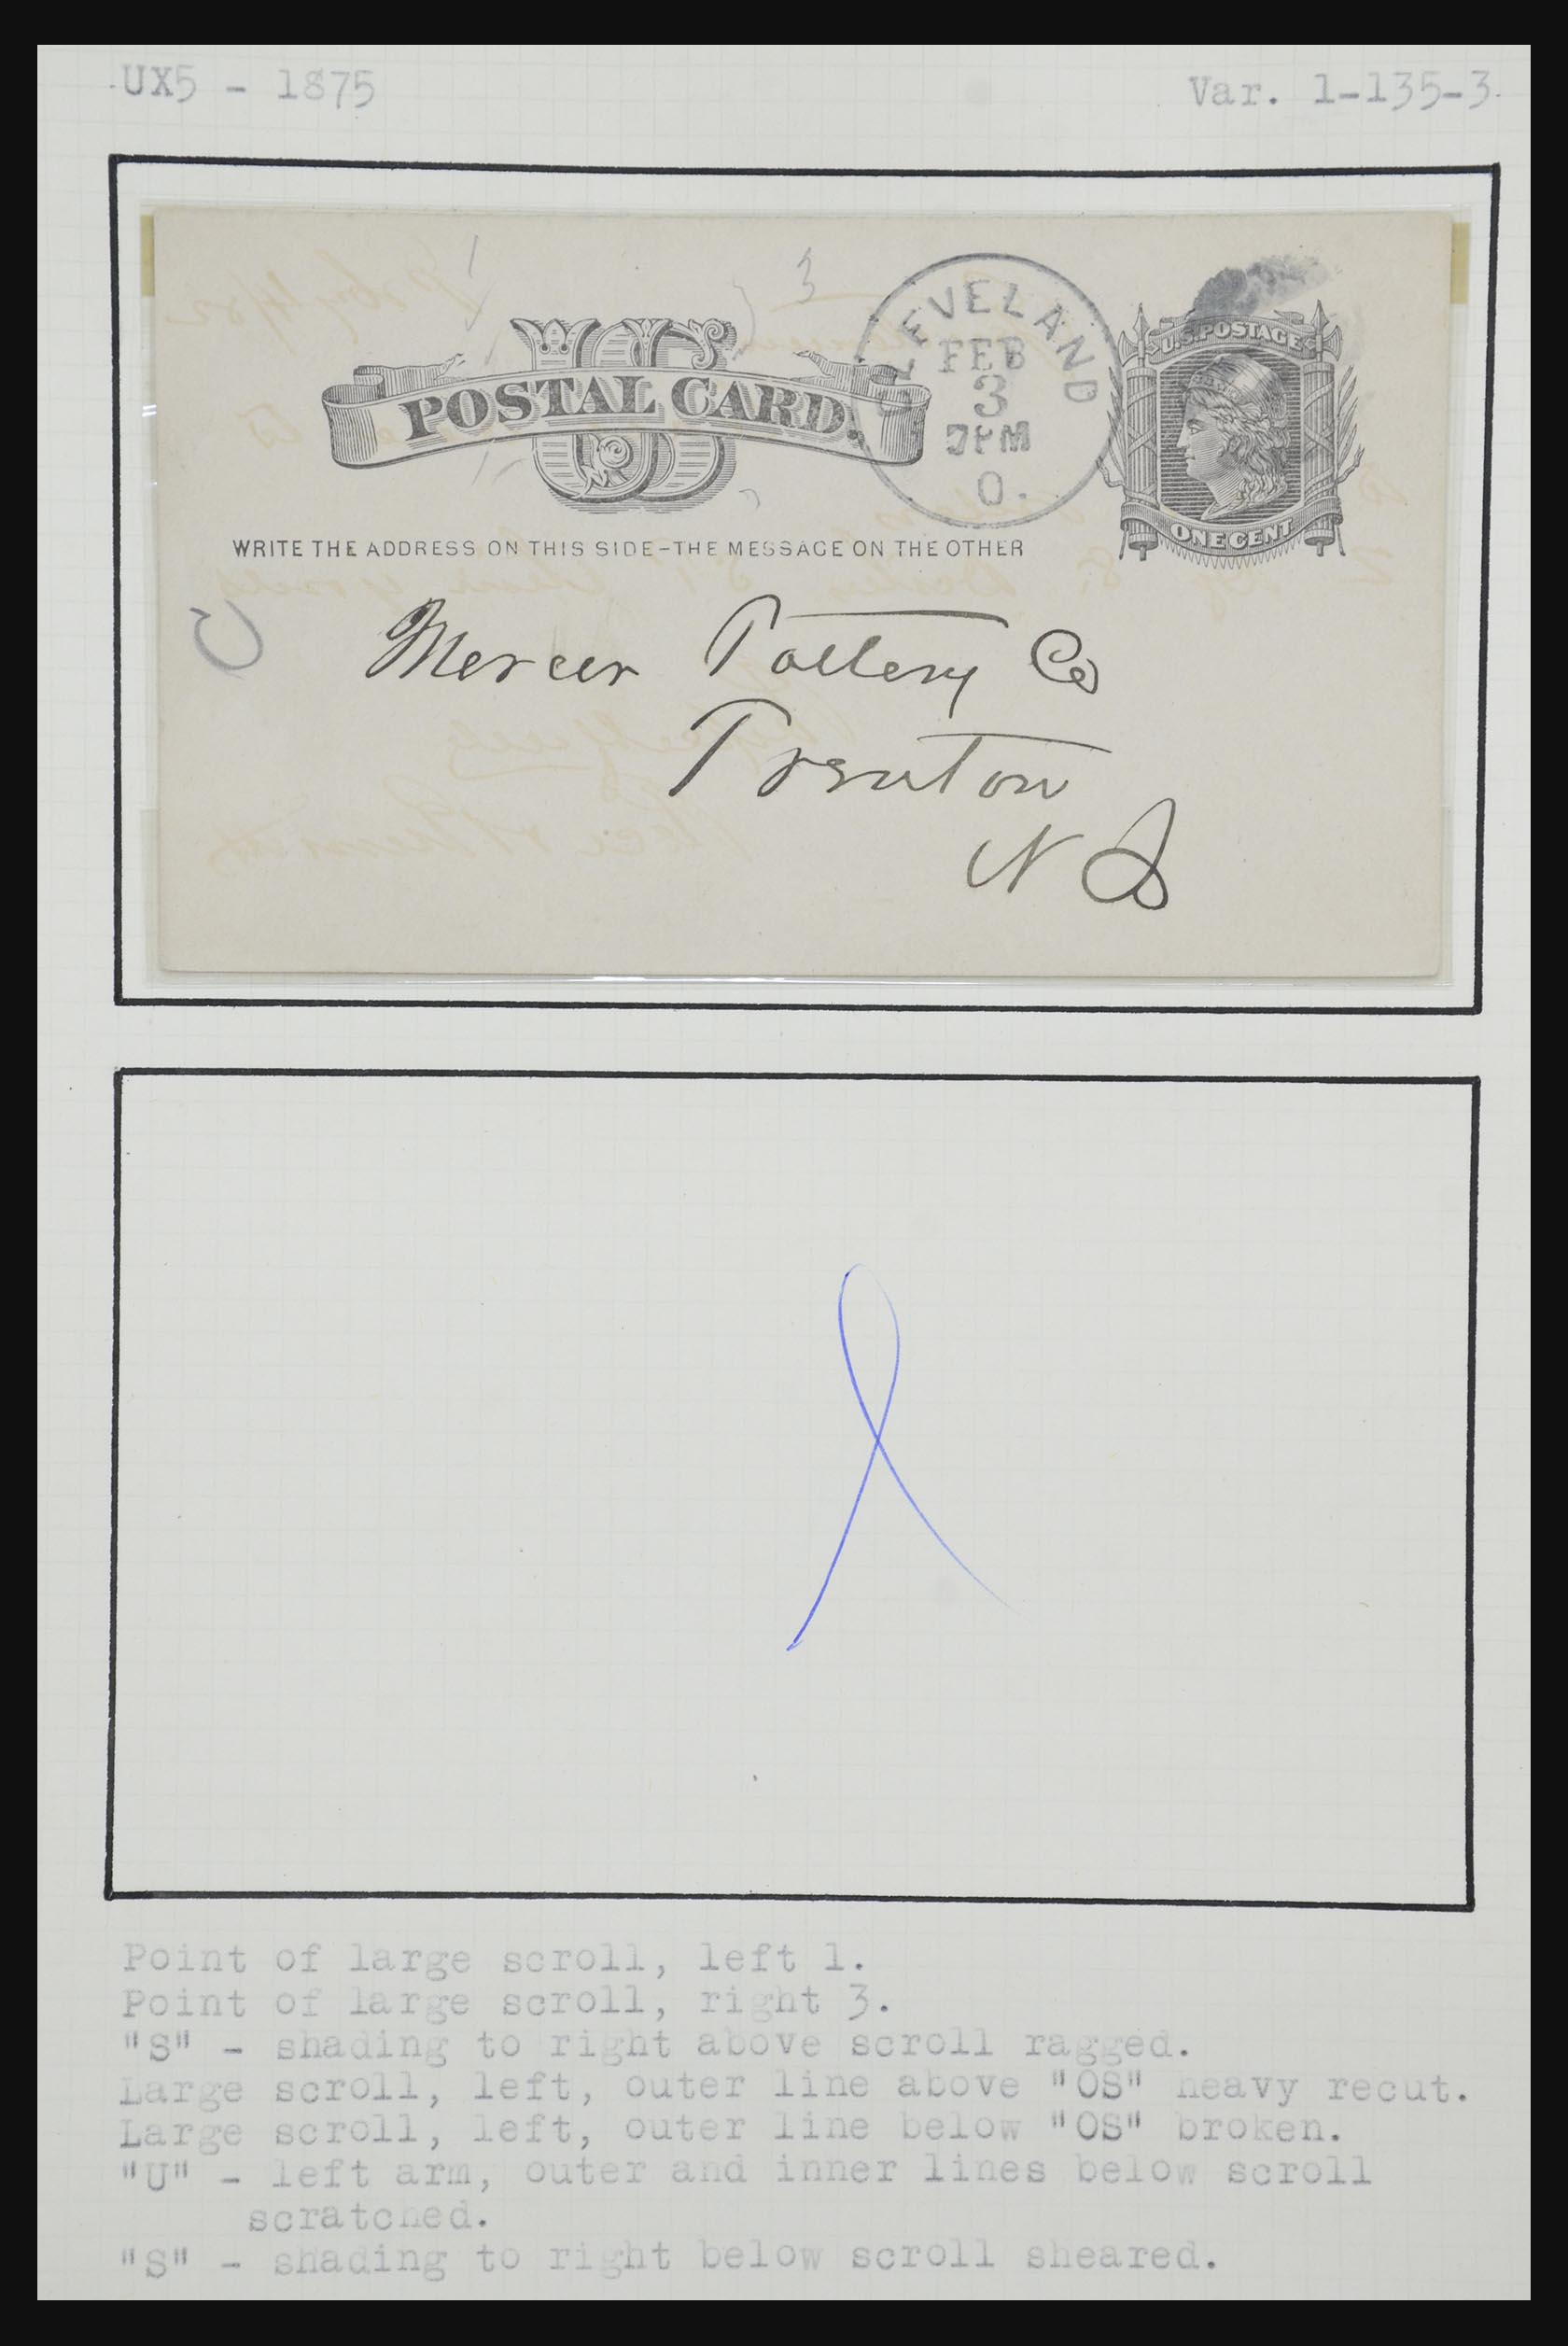 32209 099 - 32209 USA postal cards 1873-1950.